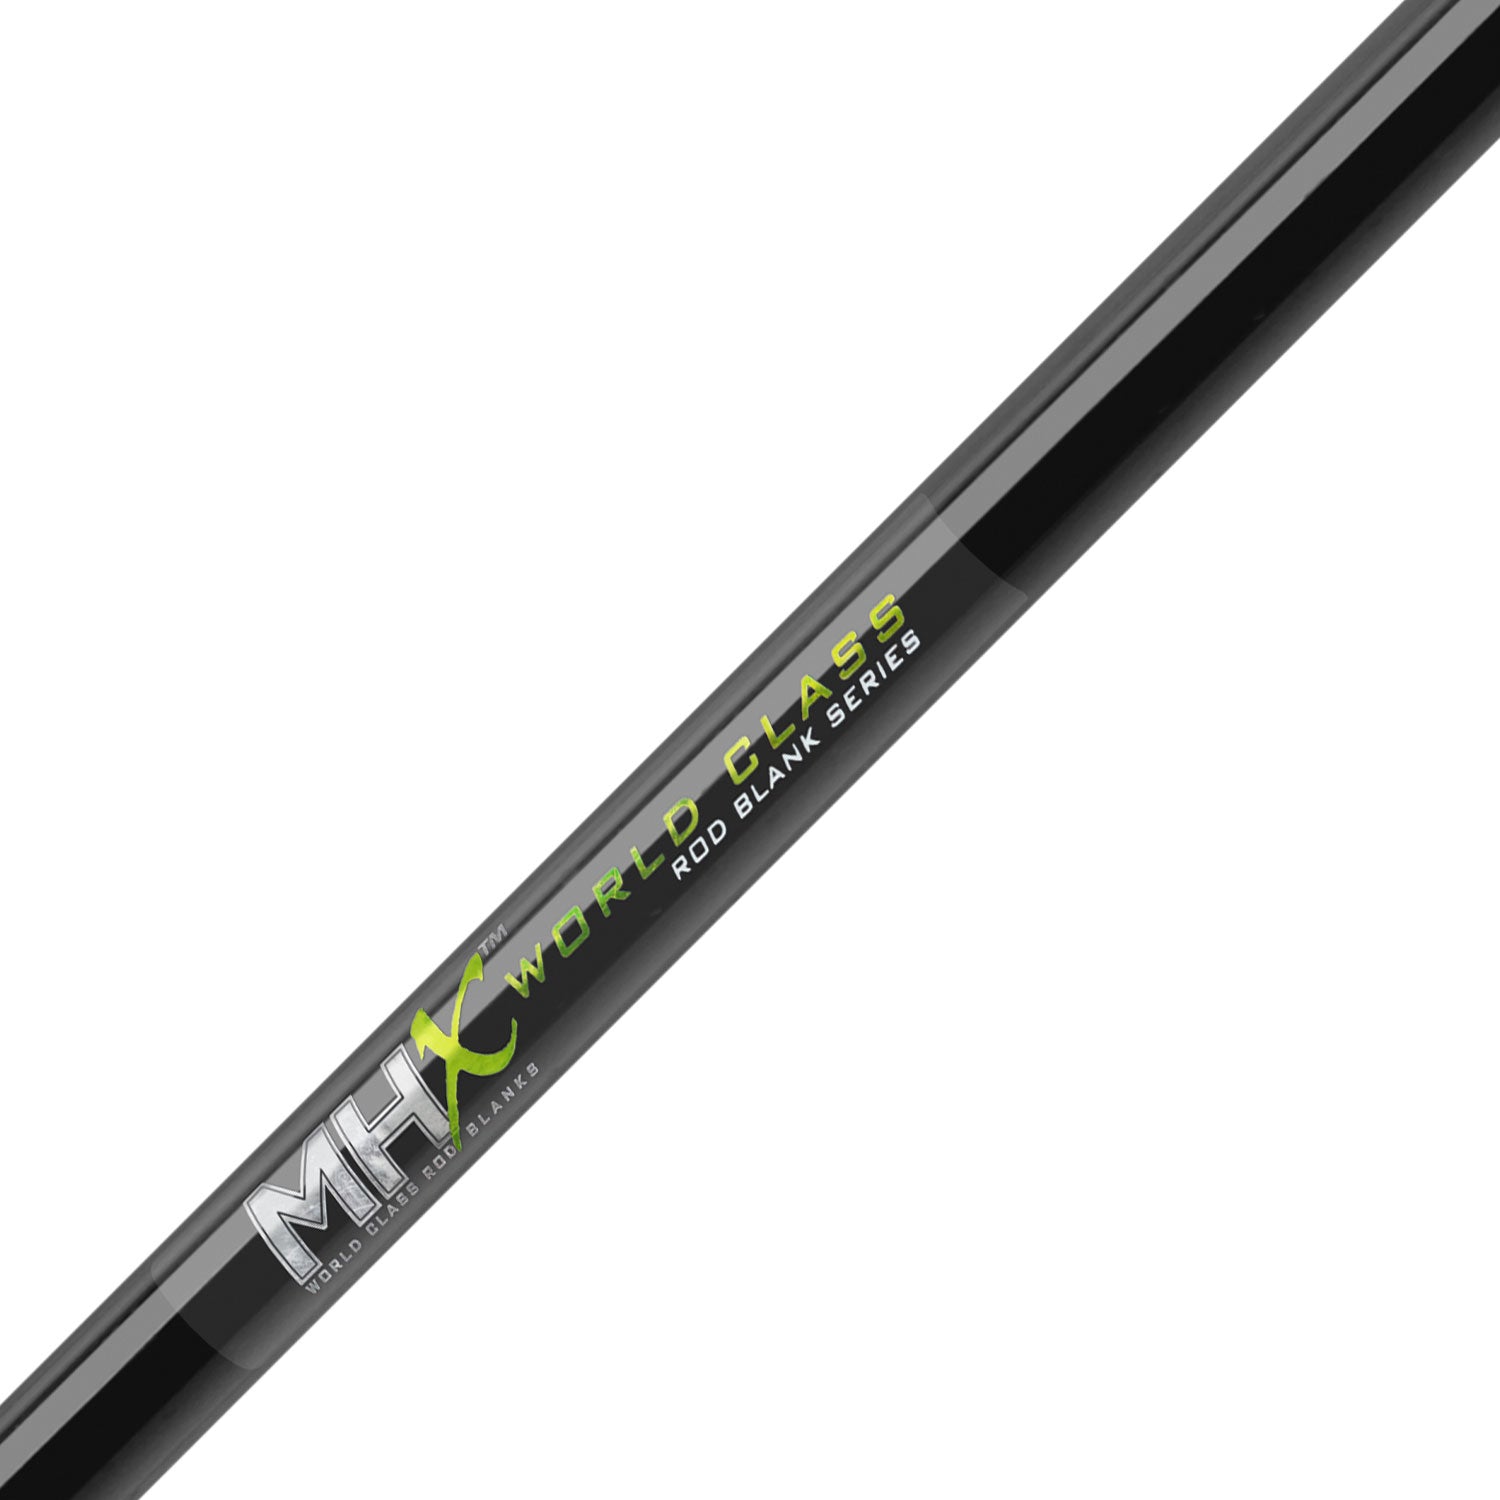 MHX 7'6" Heavy Light Saltwater Rod Blank - L905-MHX